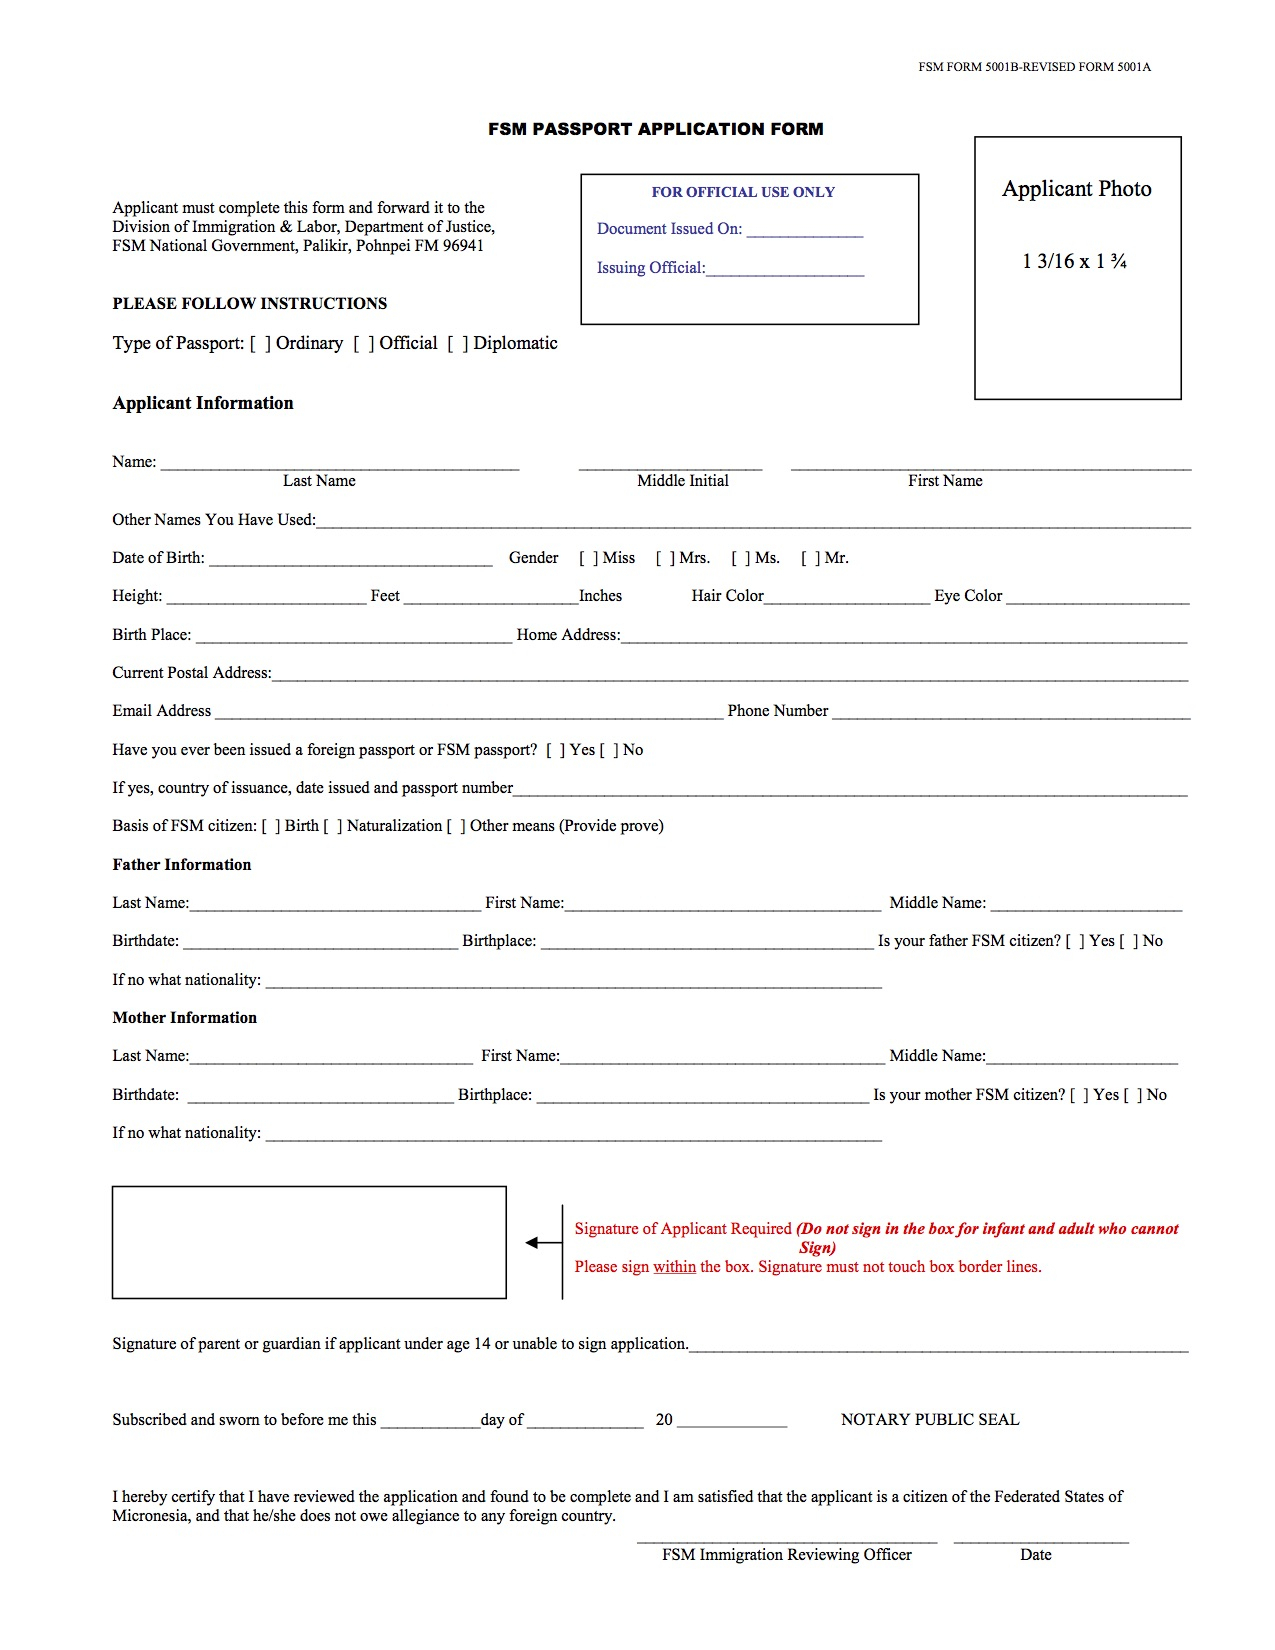 Passport Application Form Washington State PrintableForm 